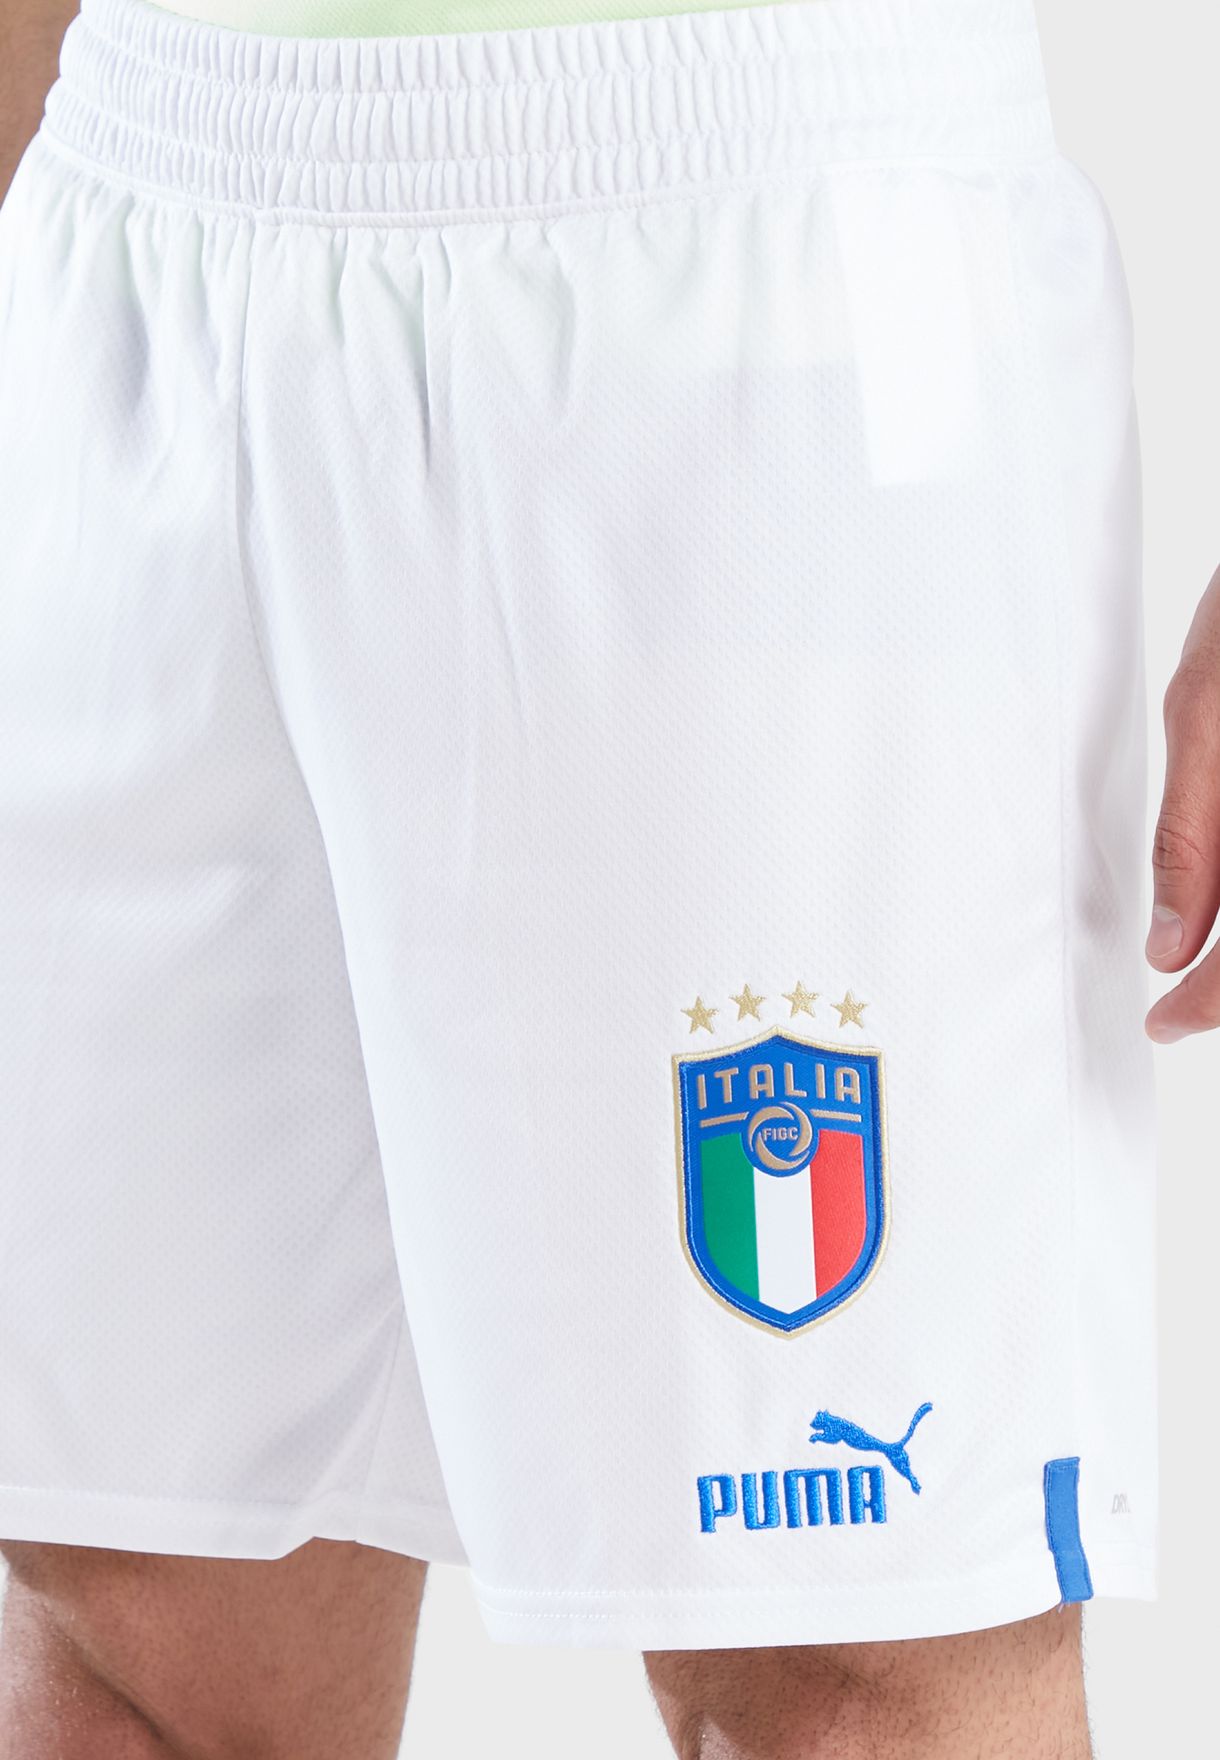 Italy Replica Shorts